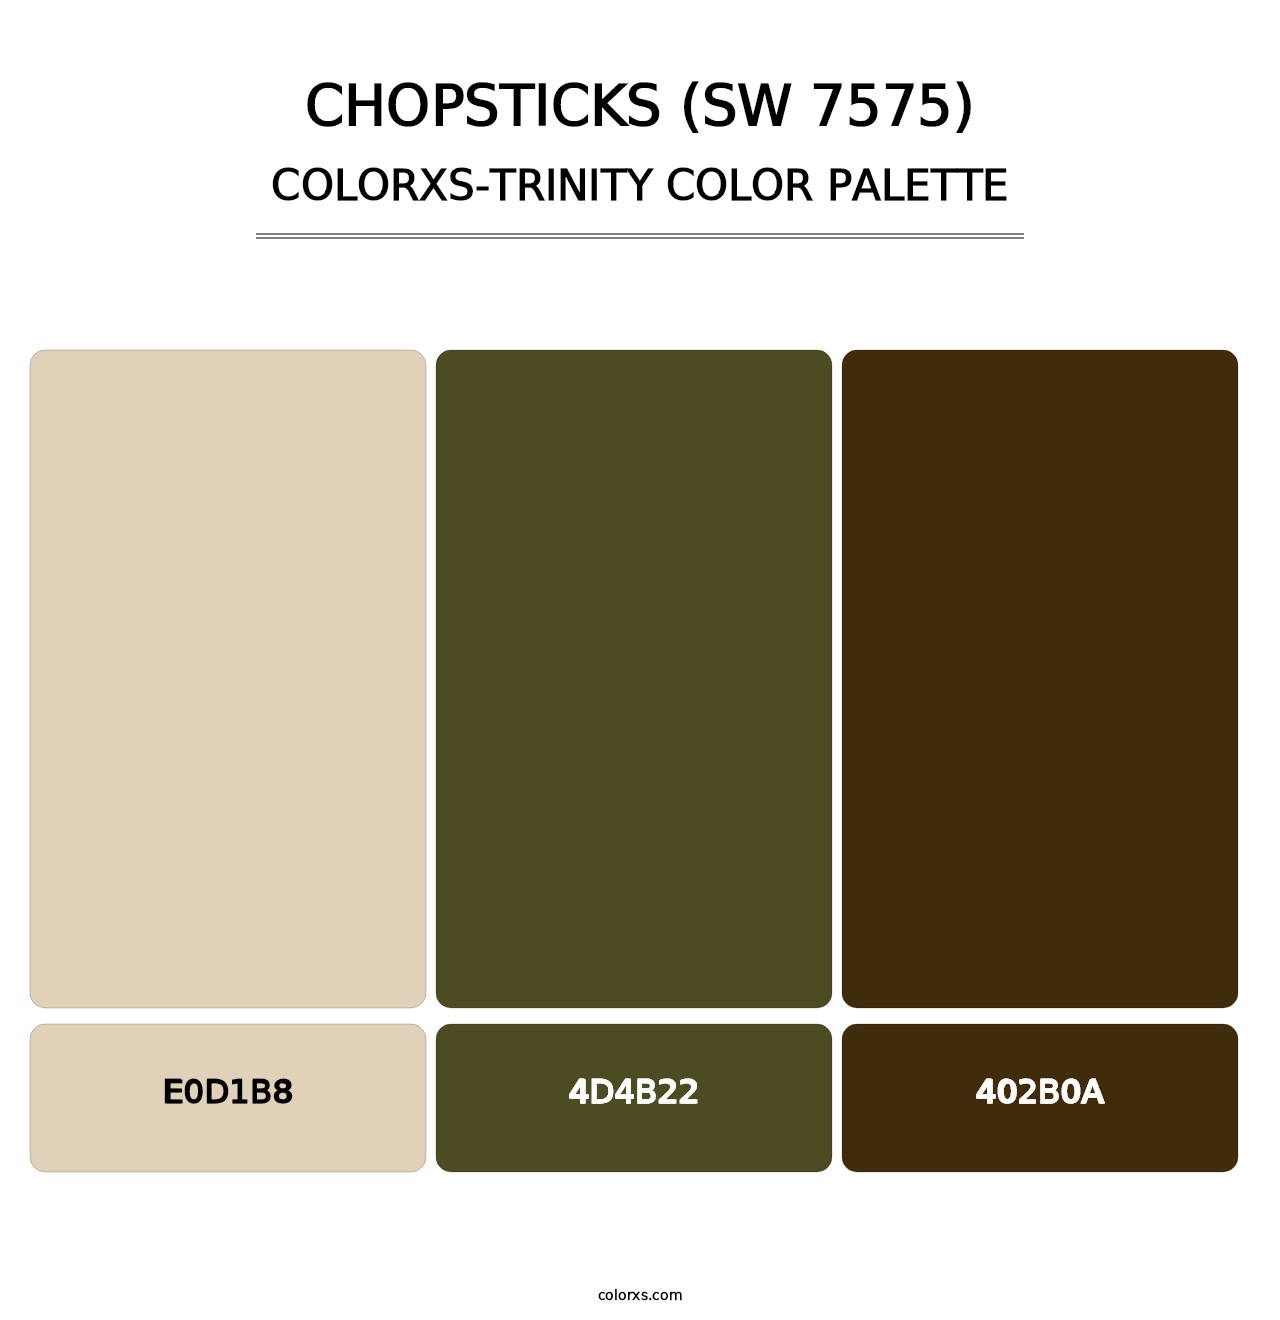 Chopsticks (SW 7575) - Colorxs Trinity Palette